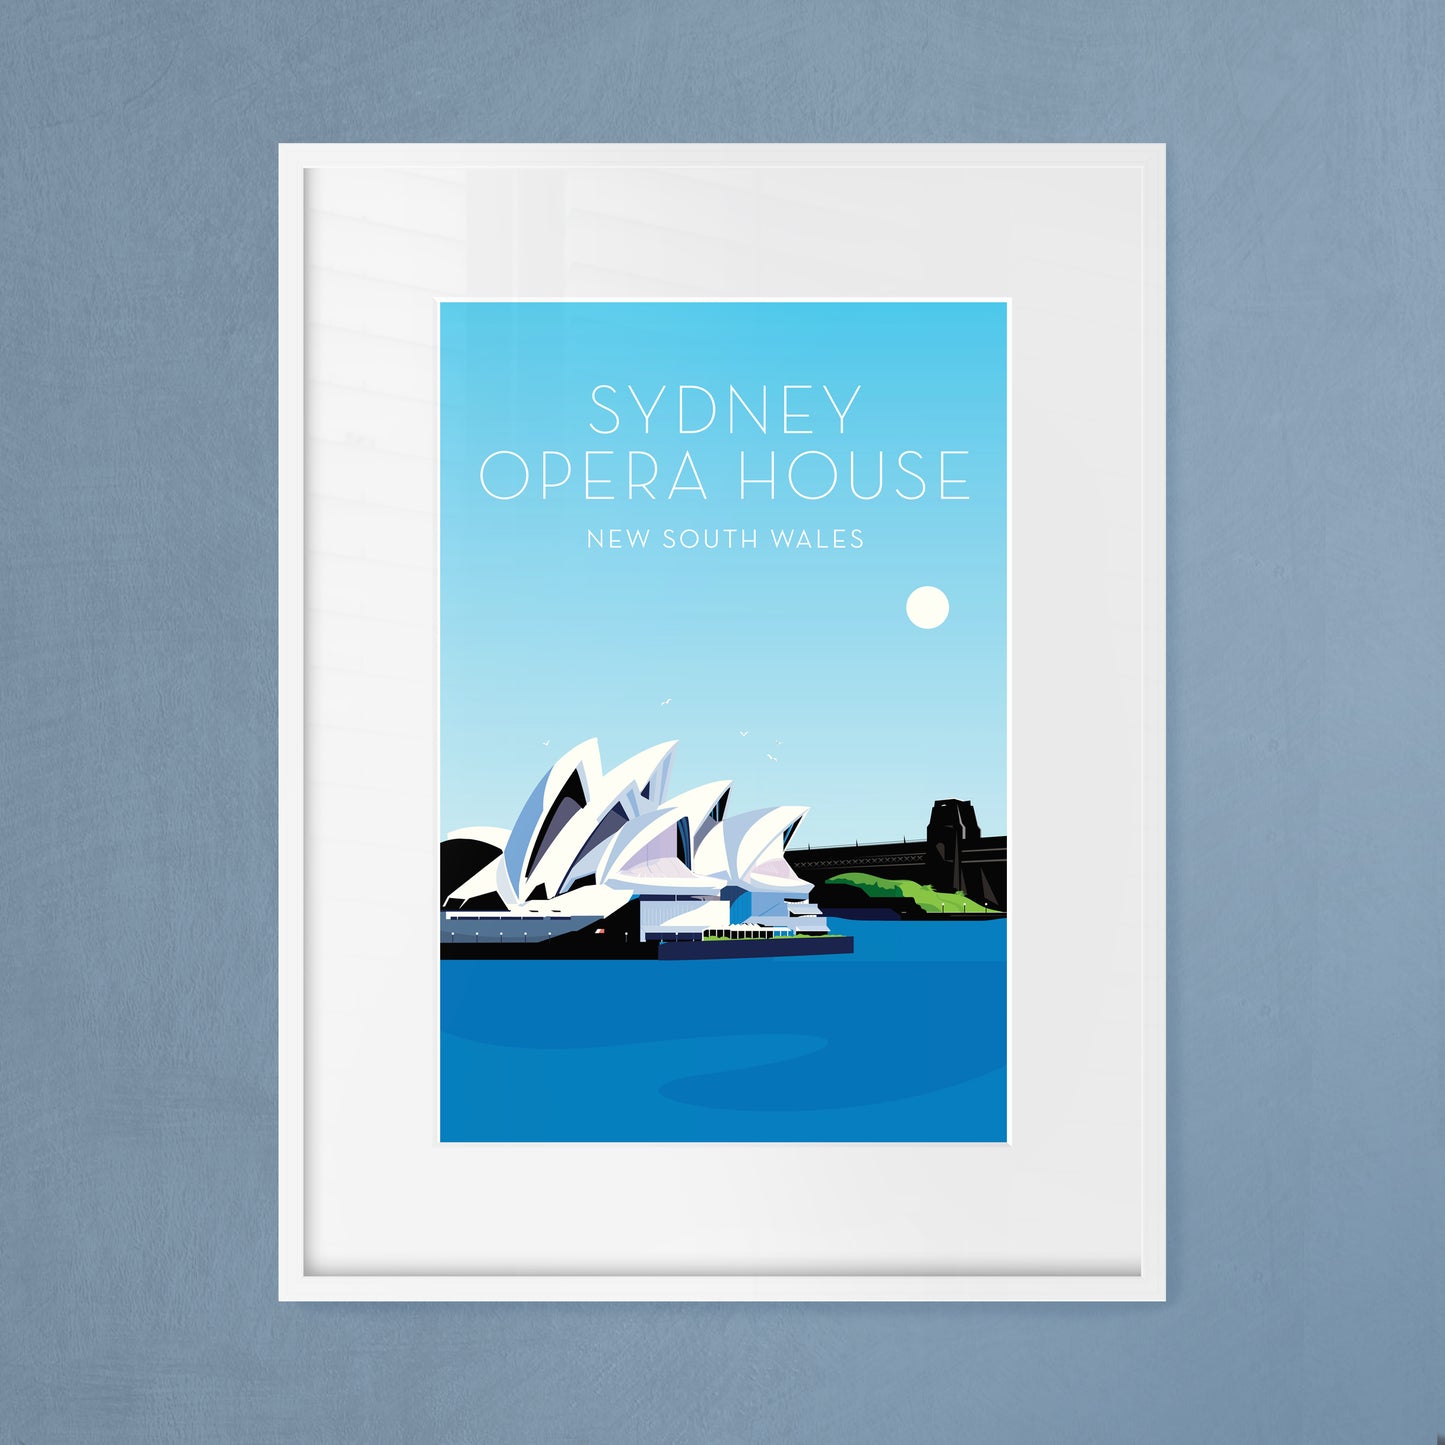 The Sydney Opera House #2